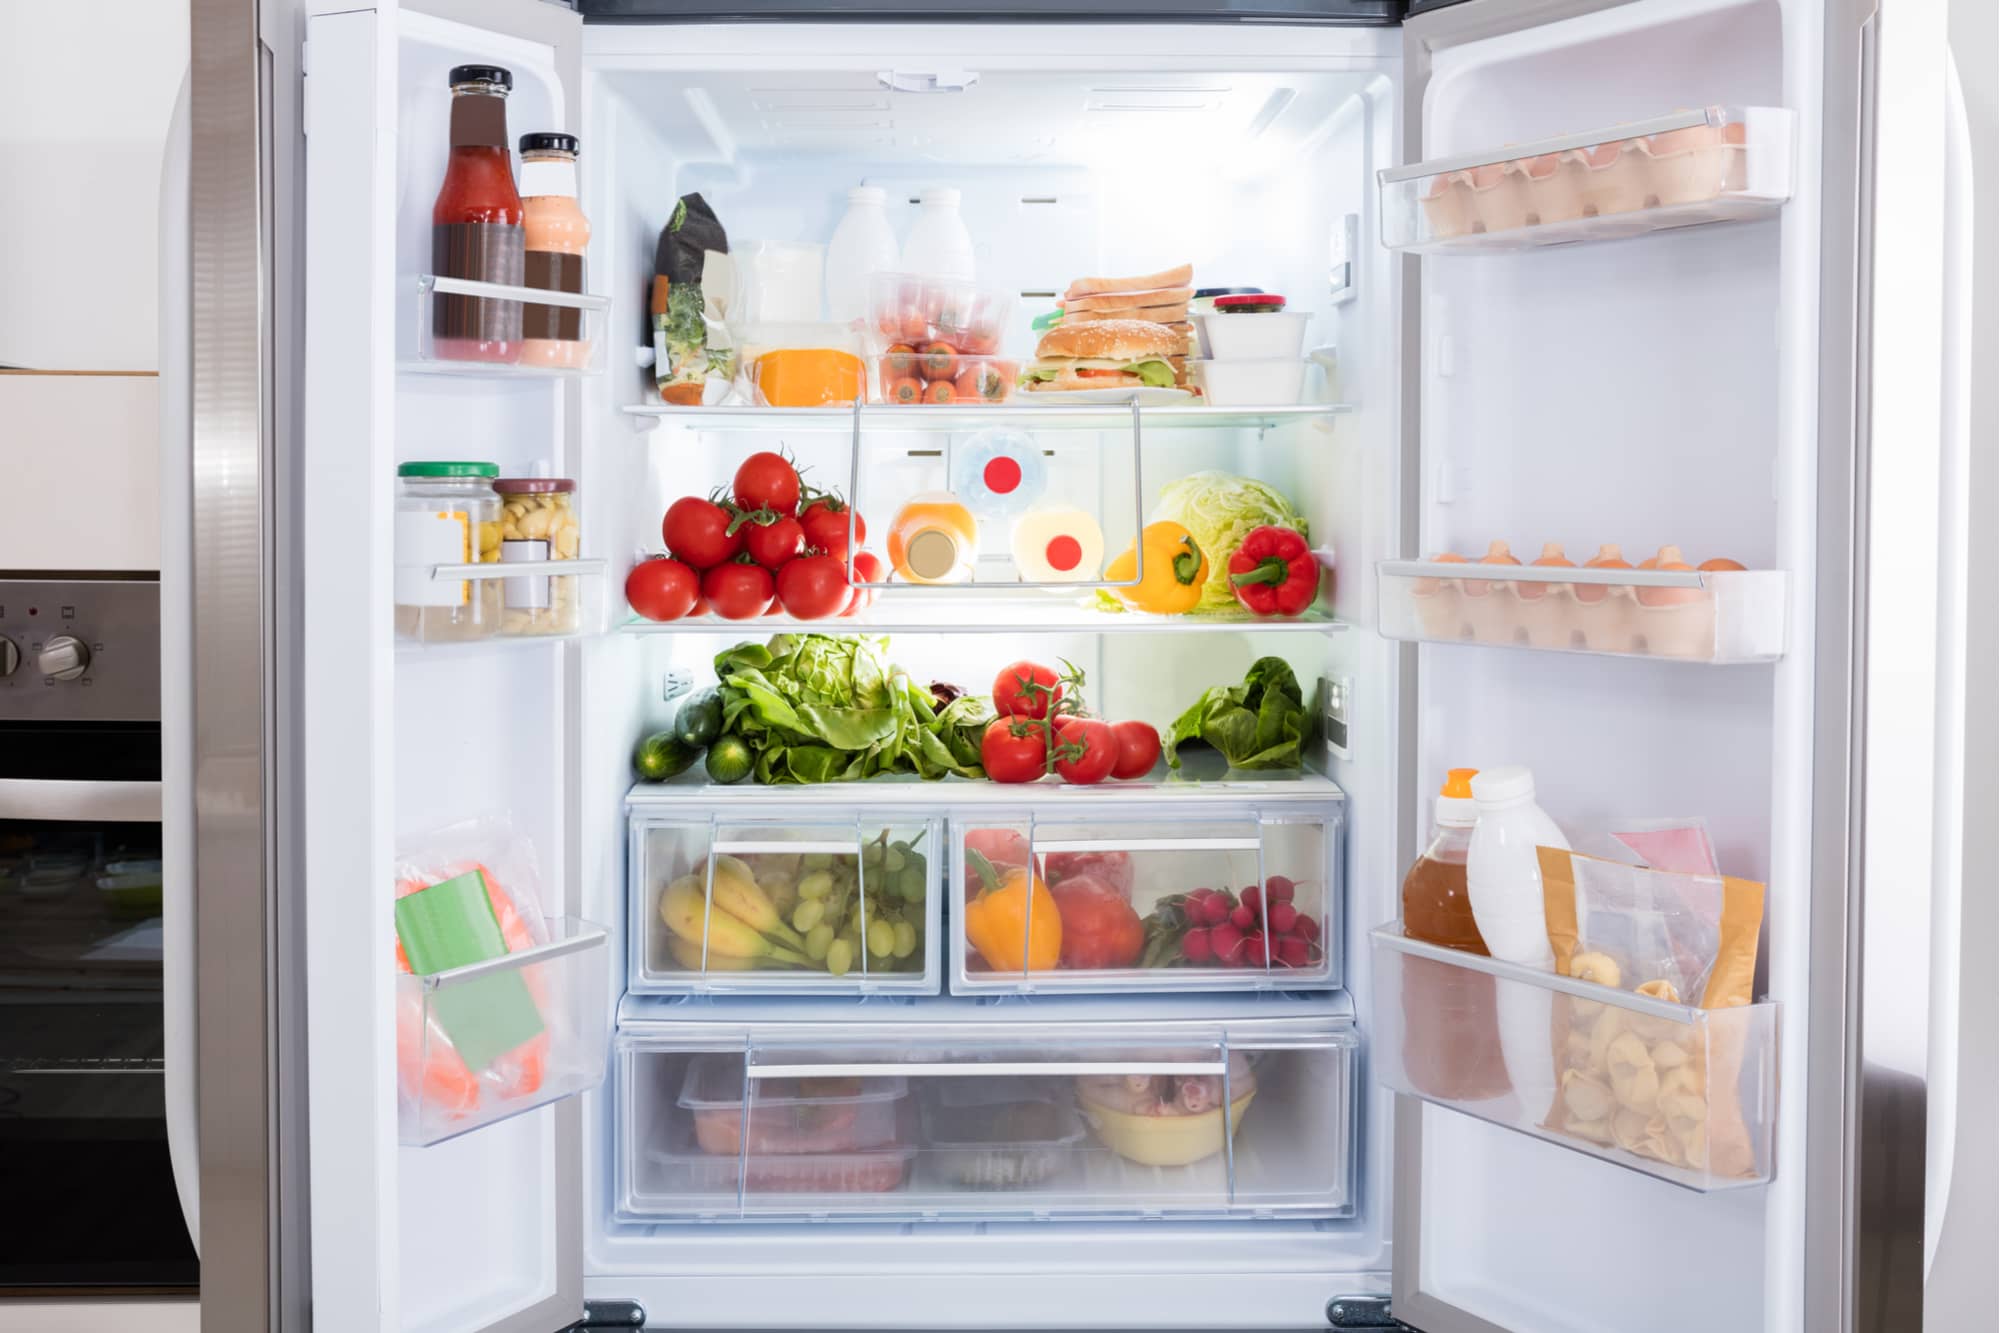 Fridge Organization Ideas - Tour Our Refrigerator! - Small Stuff Counts